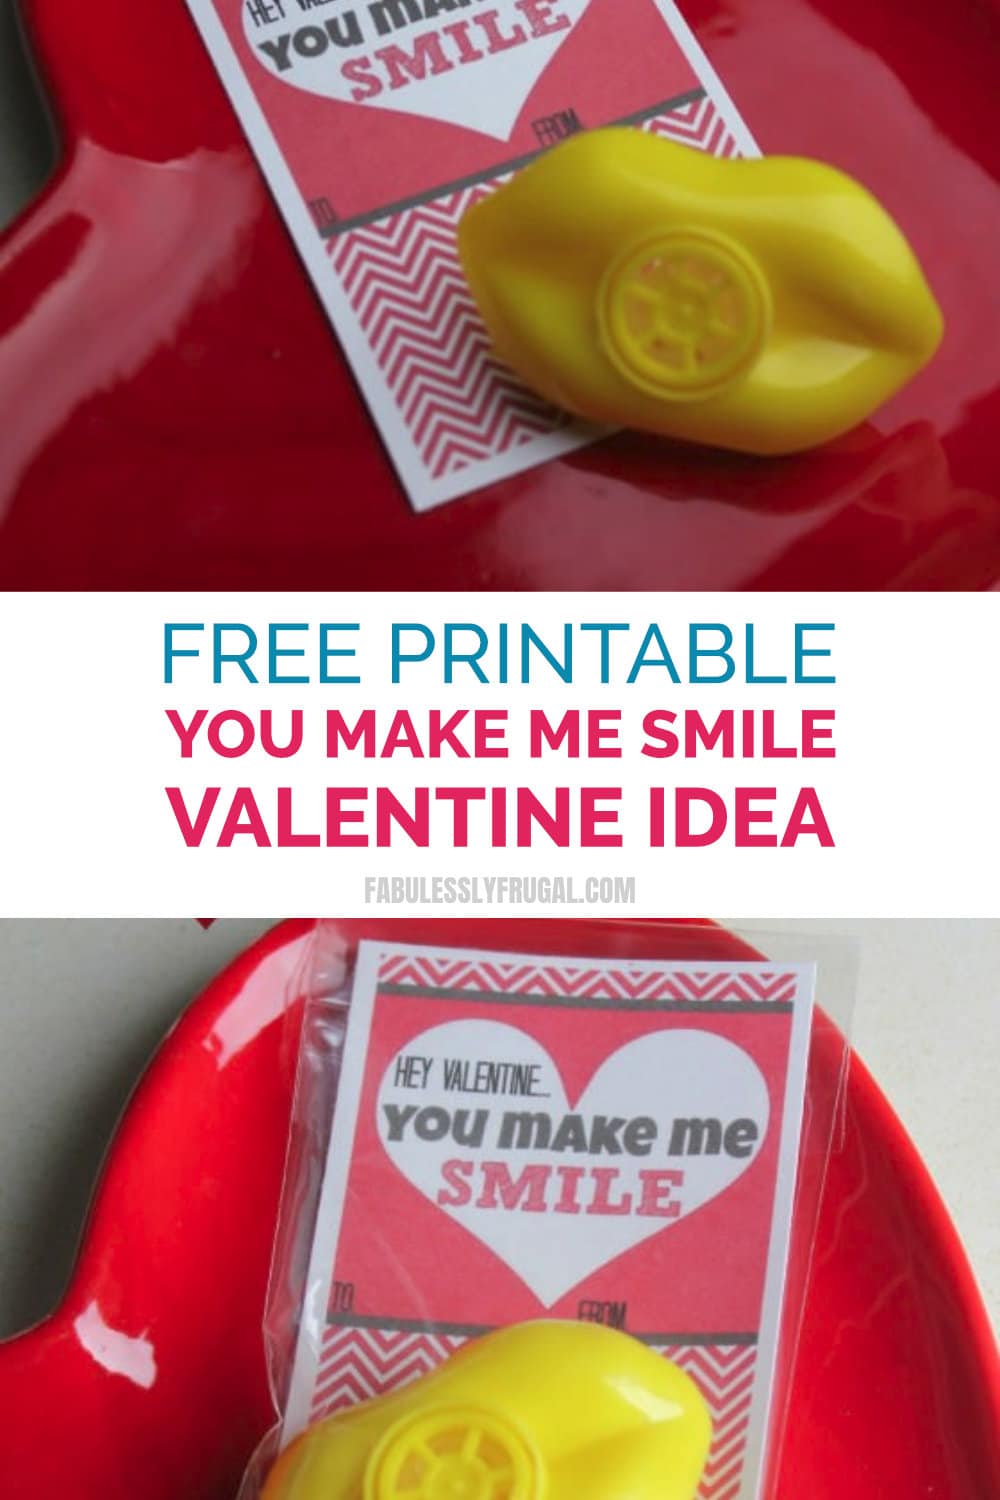 Free printable you make me smile valentine idea